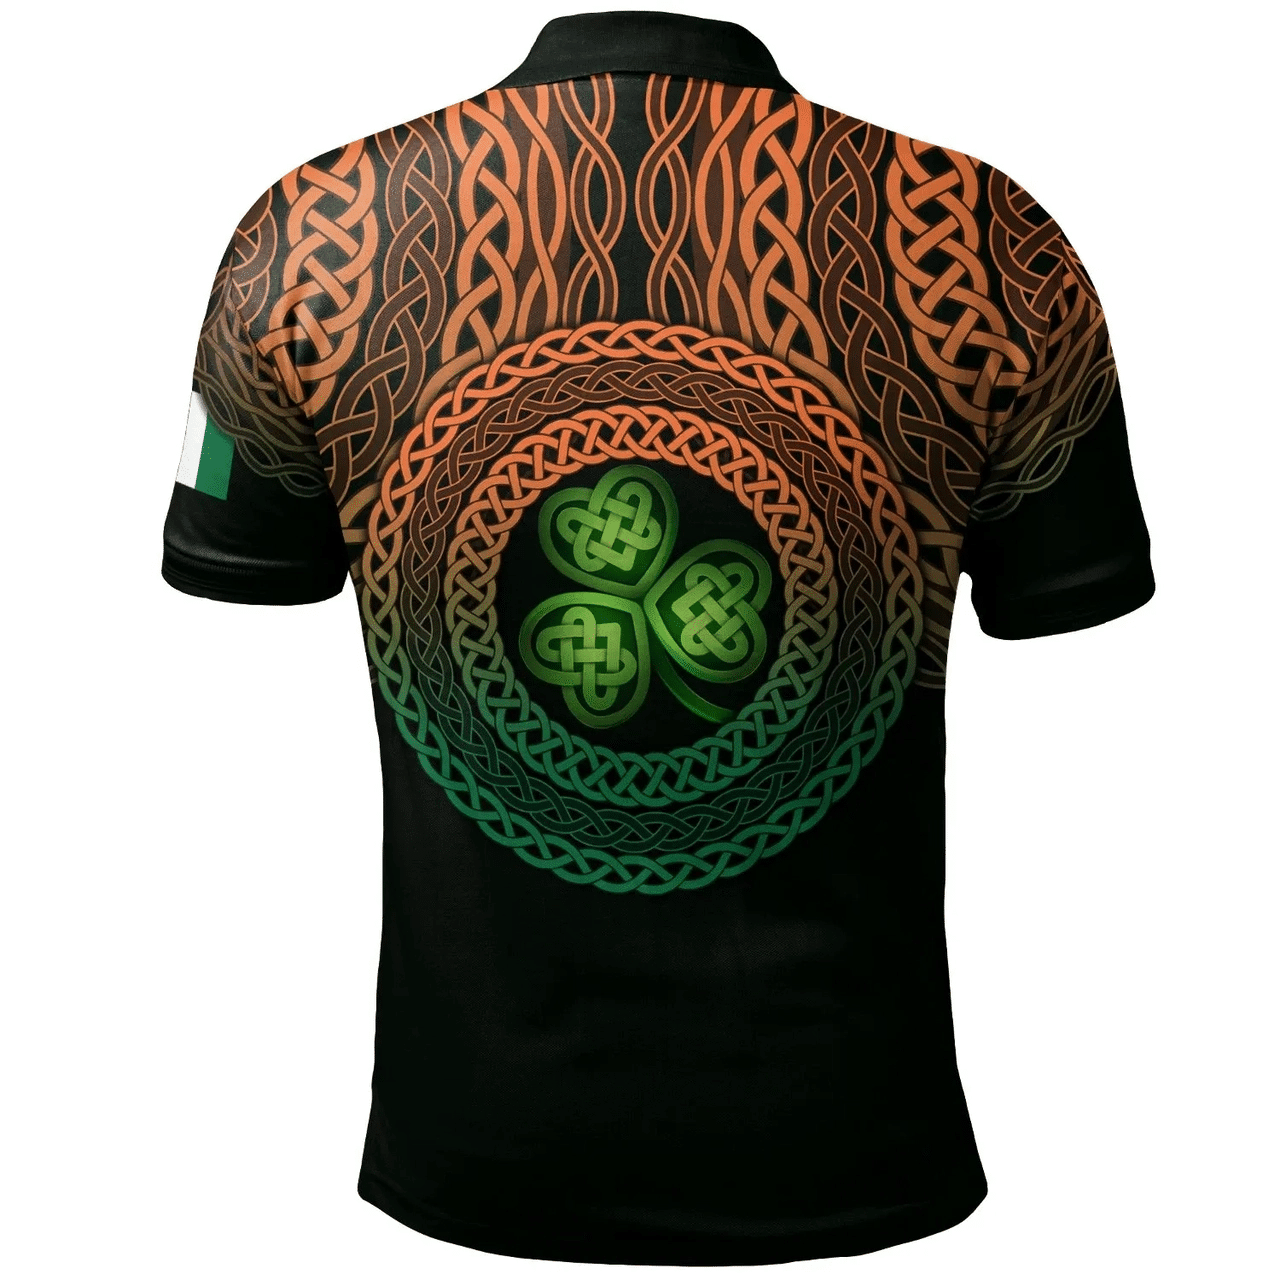 1stIreland Ireland Polo Shirt - Gleeson or O'Glissane Irish Family Crest Polo Shirt - Celtic Pride A7 | 1stIreland.com